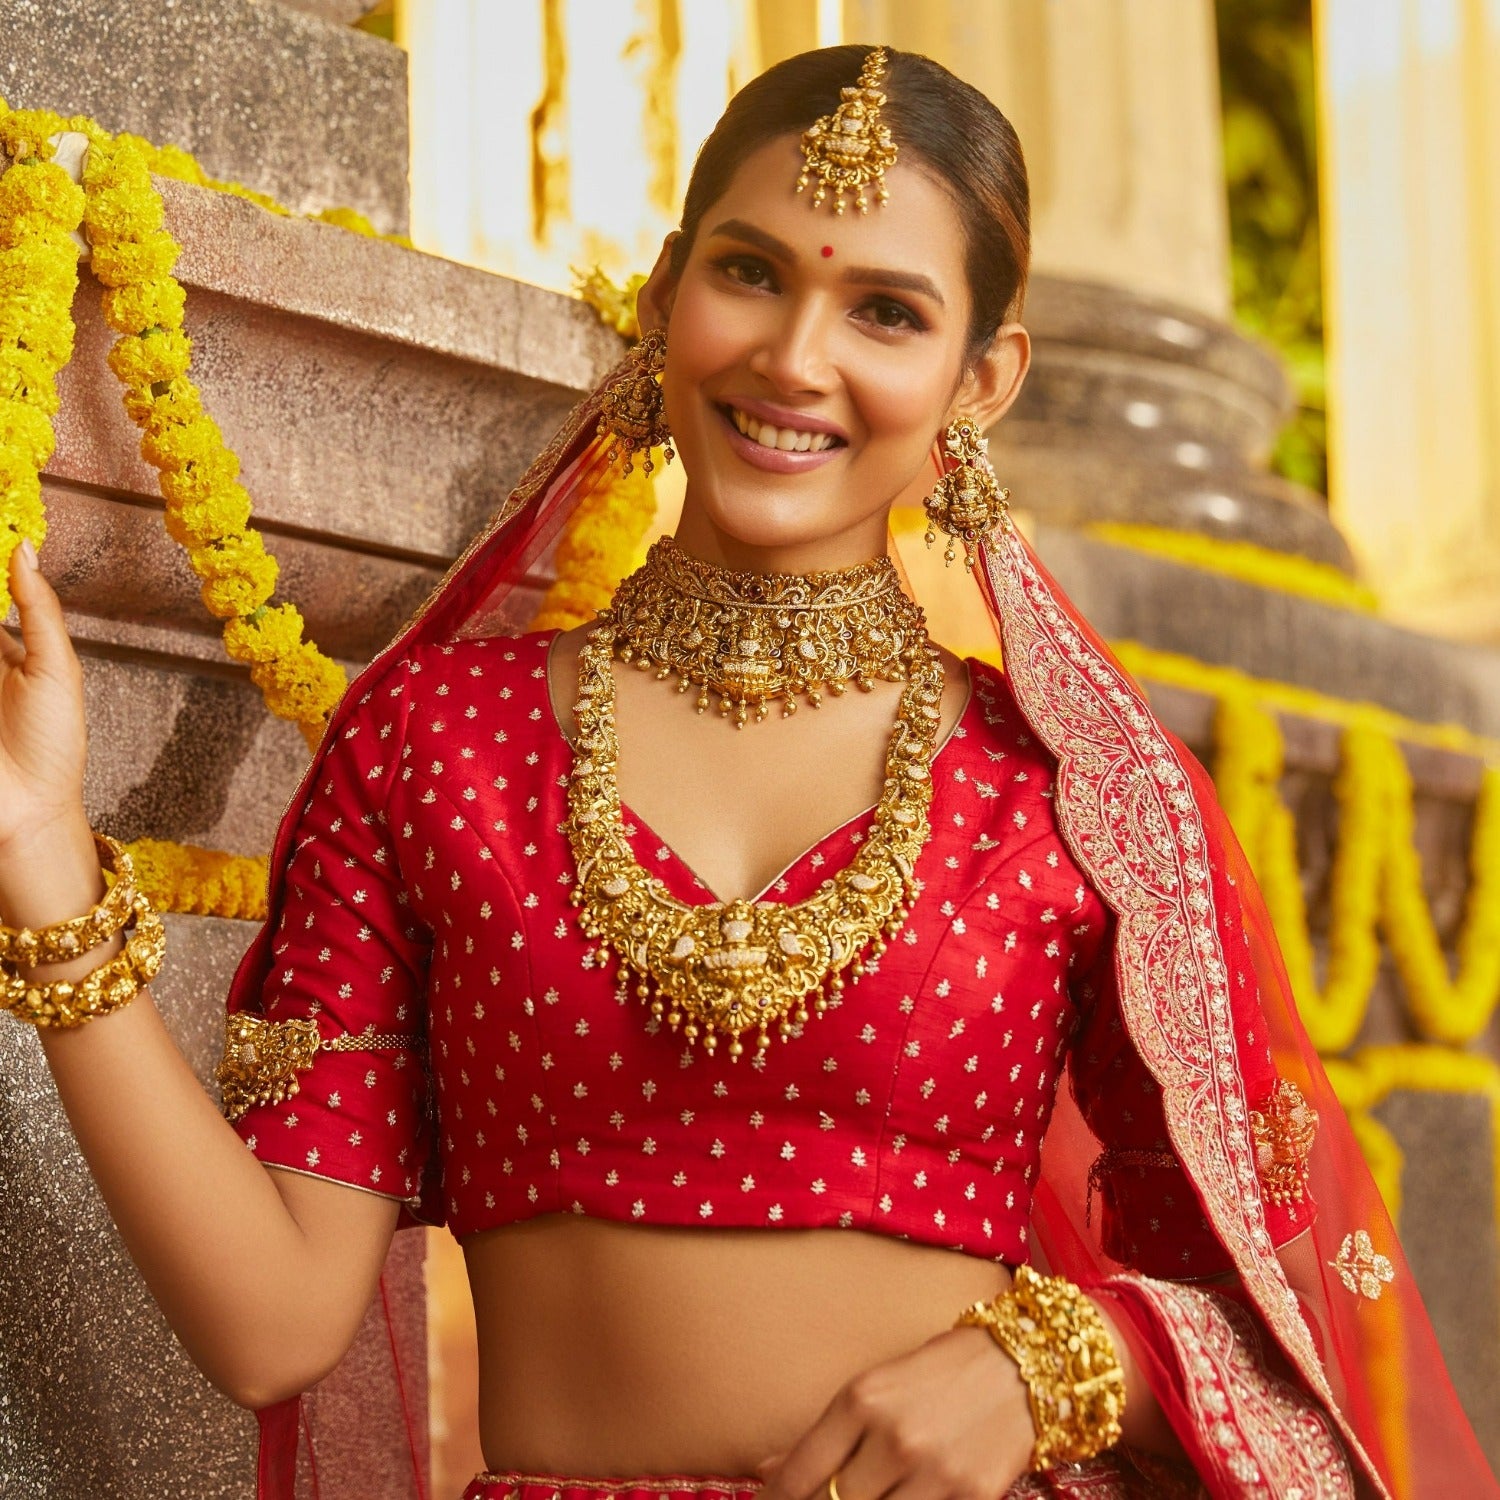 Shop Indian Bridal Wedding Jewelry Sets Online